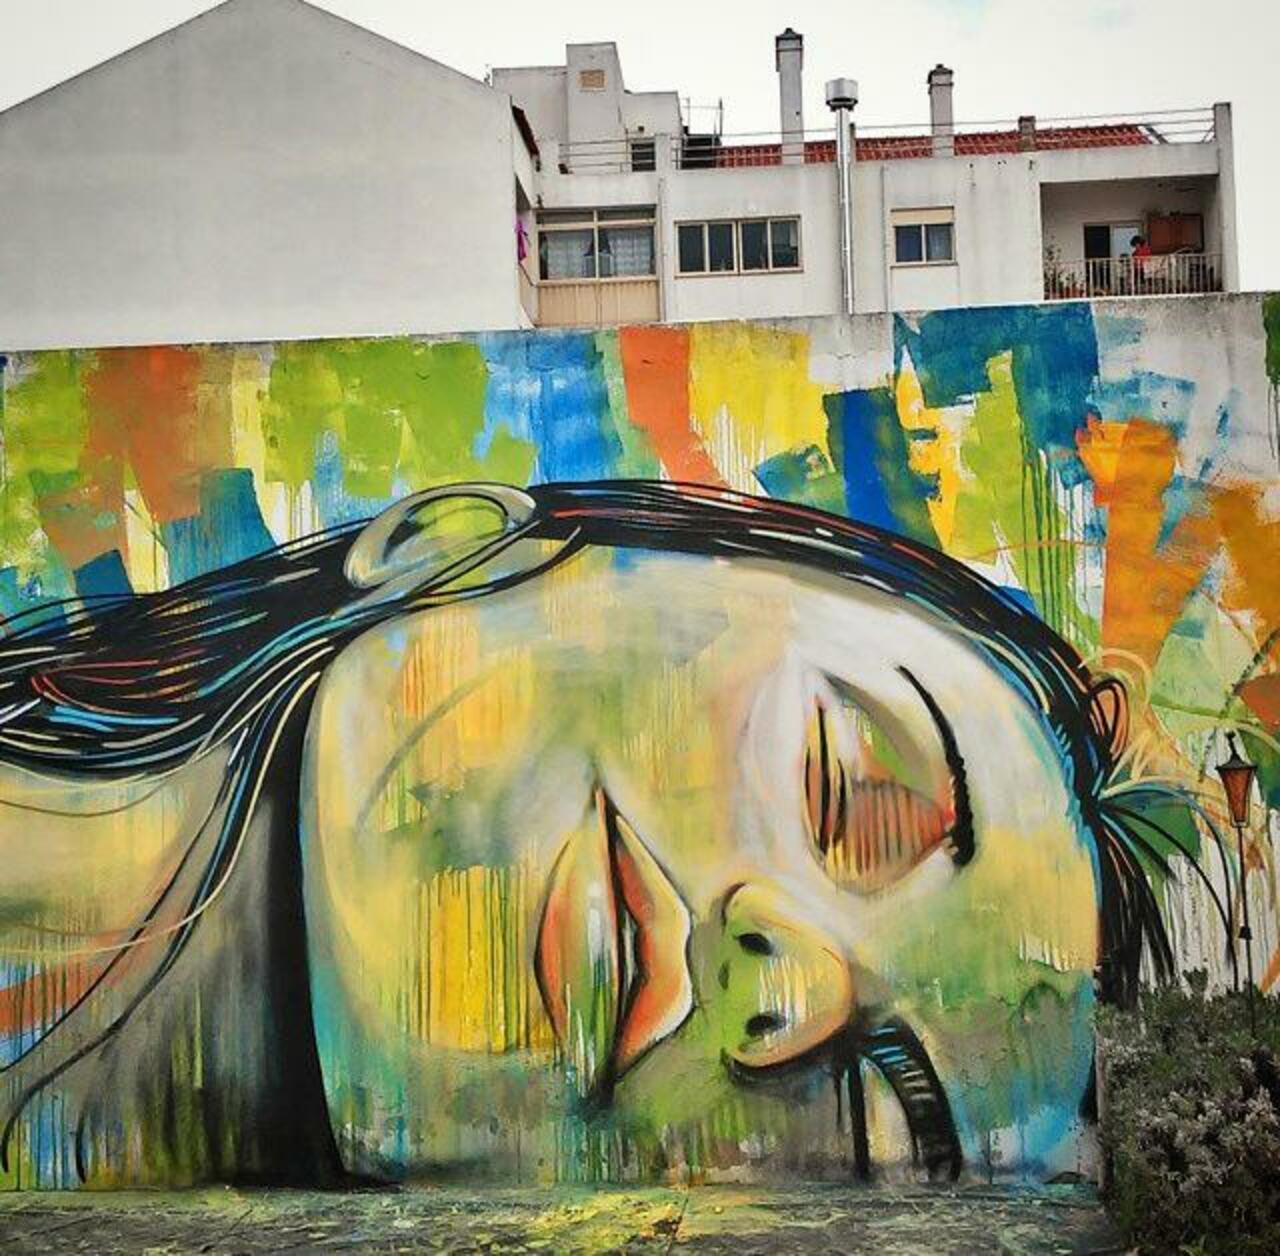 New Street Art wall in Ponte de Sor, Portugal by Alice Pasquini 

#art #arte #graffiti #streetart http://t.co/lhcBvGU6wN